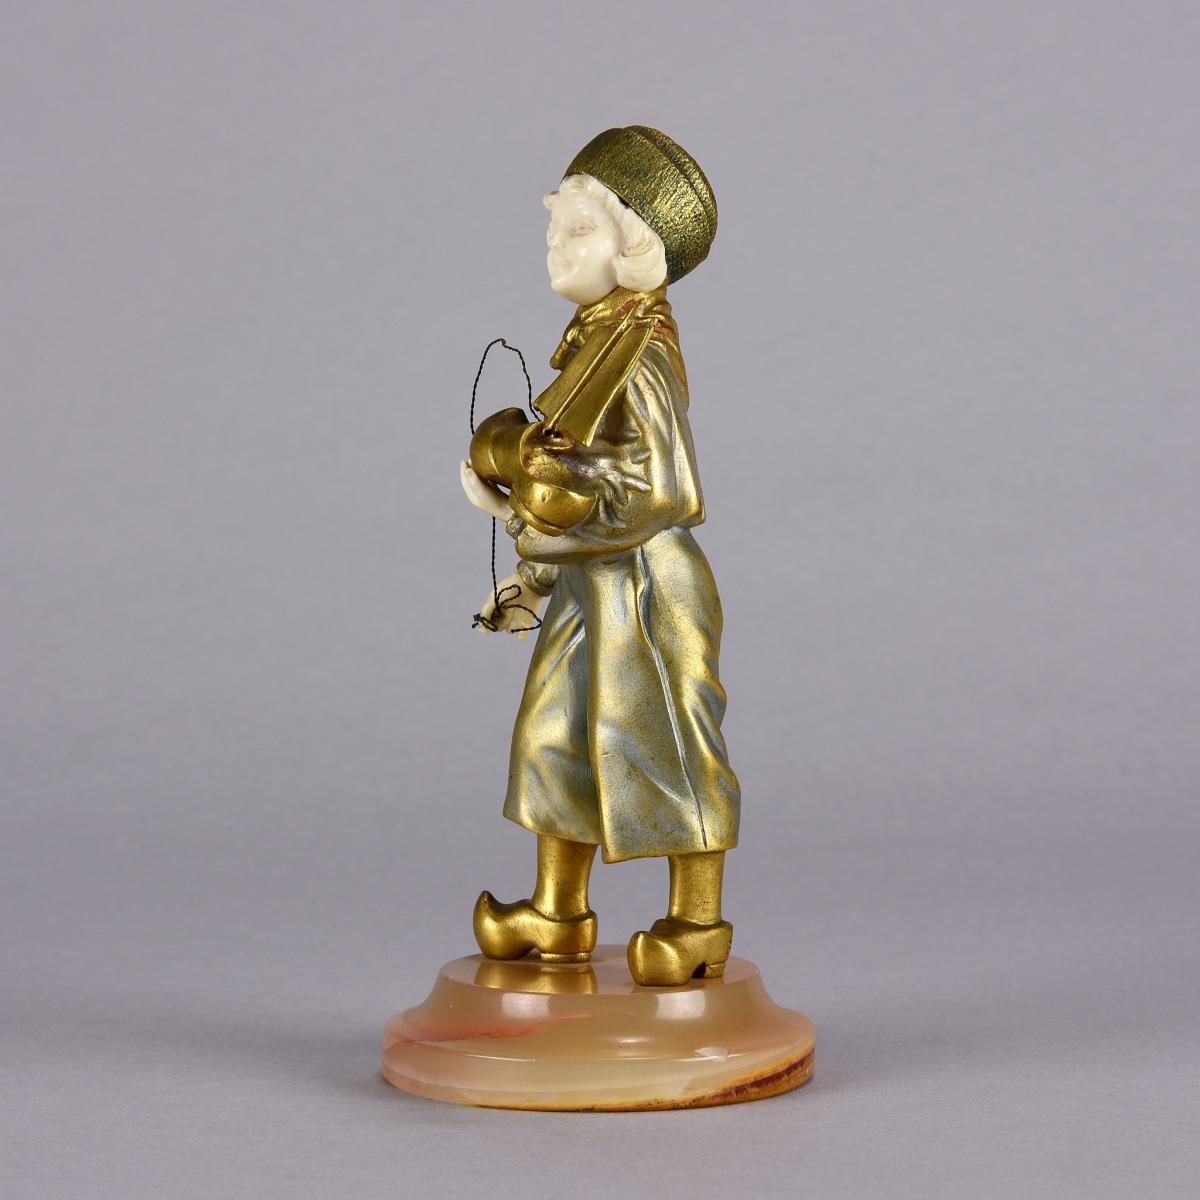 French Gilt Bronze & Ivory Sculpture entitled "Little Dutch Boy" by Marquet